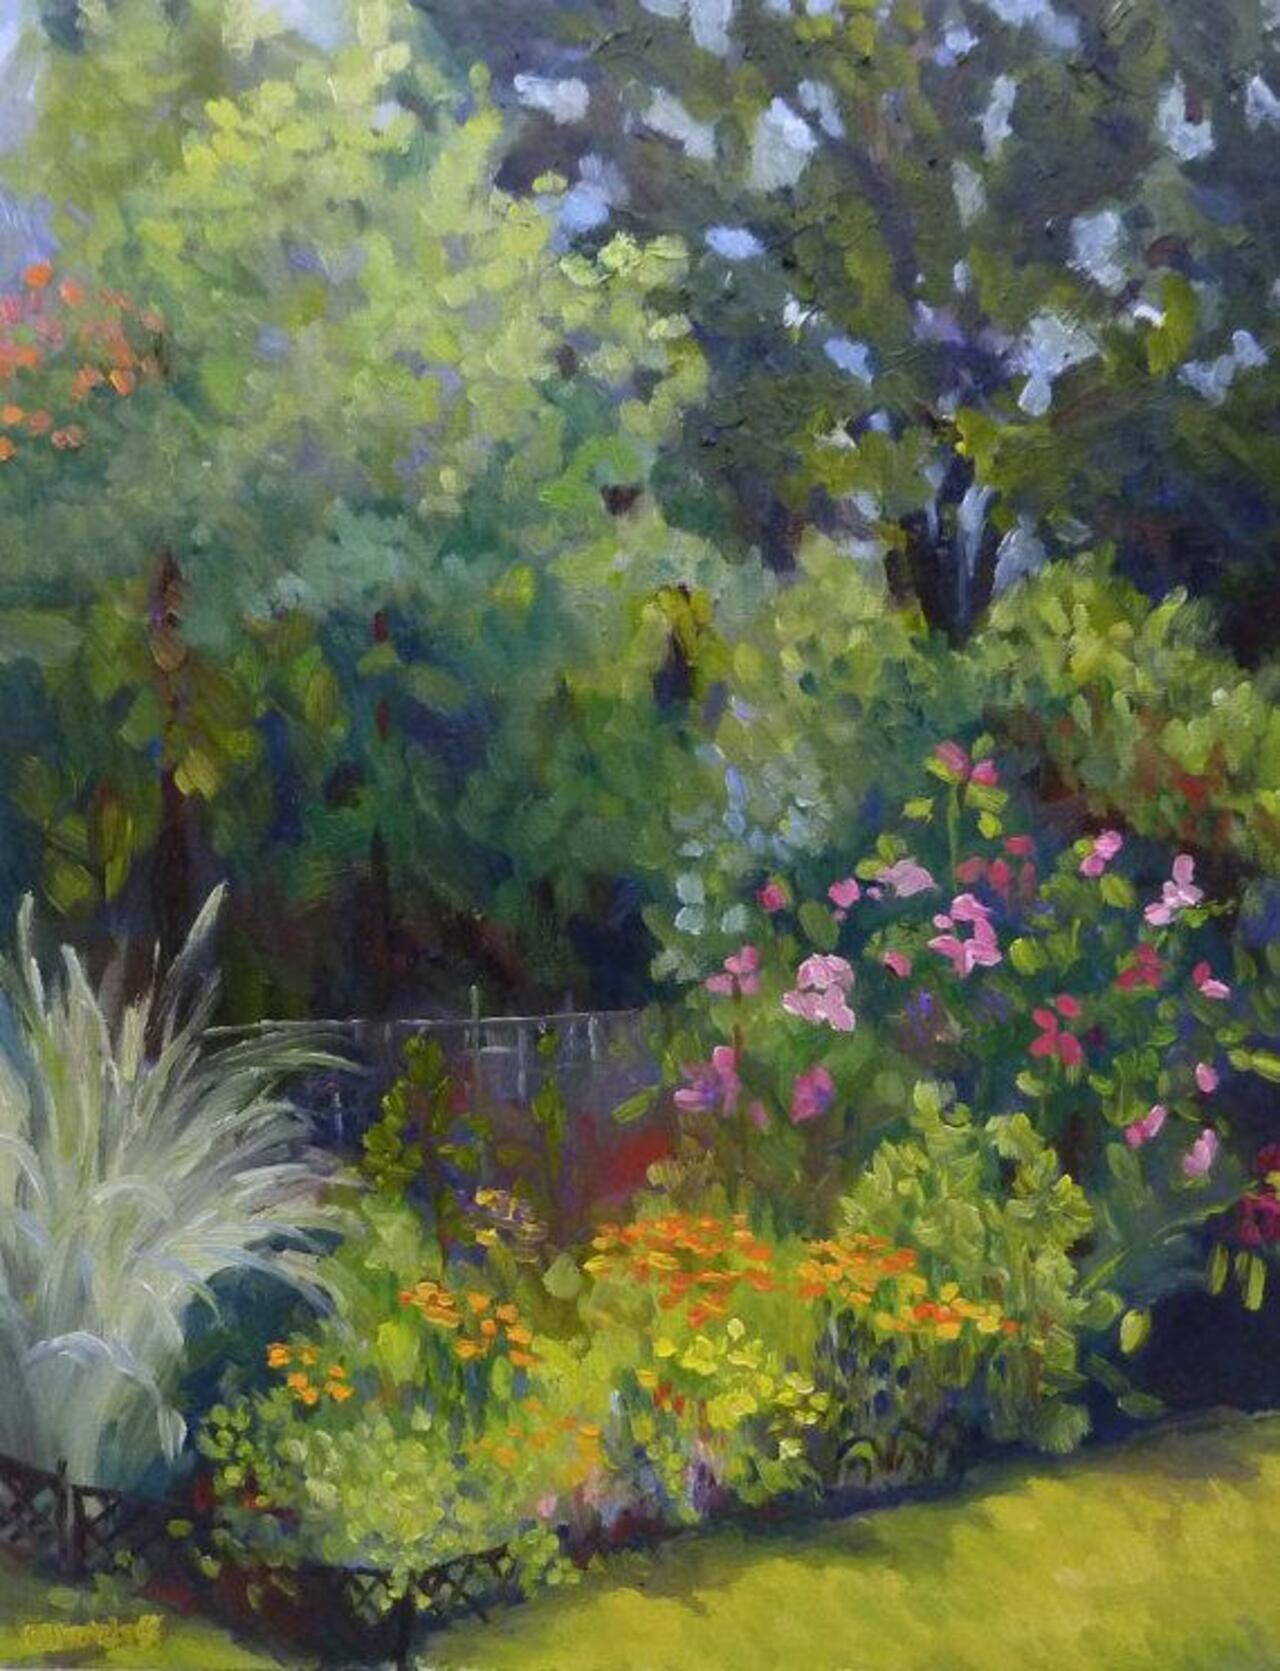 Garden Landscape Oil Painting Original Colorful Texture.. http://arnd.co/SnmUI #etsy #art http://t.co/pB9iG4mnja